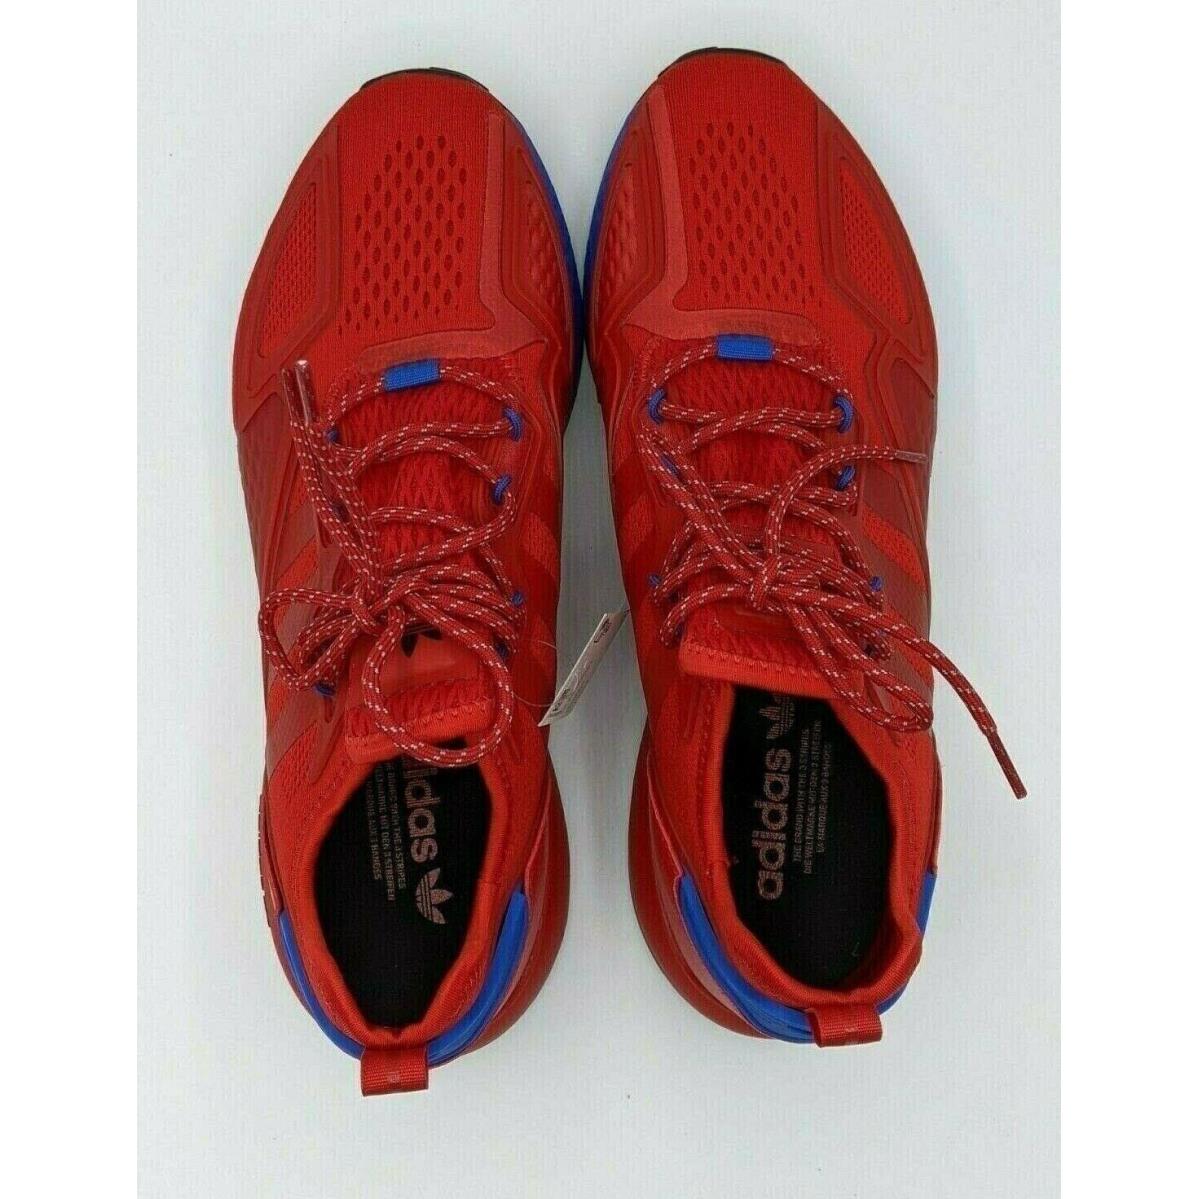 Adidas shoes Originals Boost - Blue, Red 7